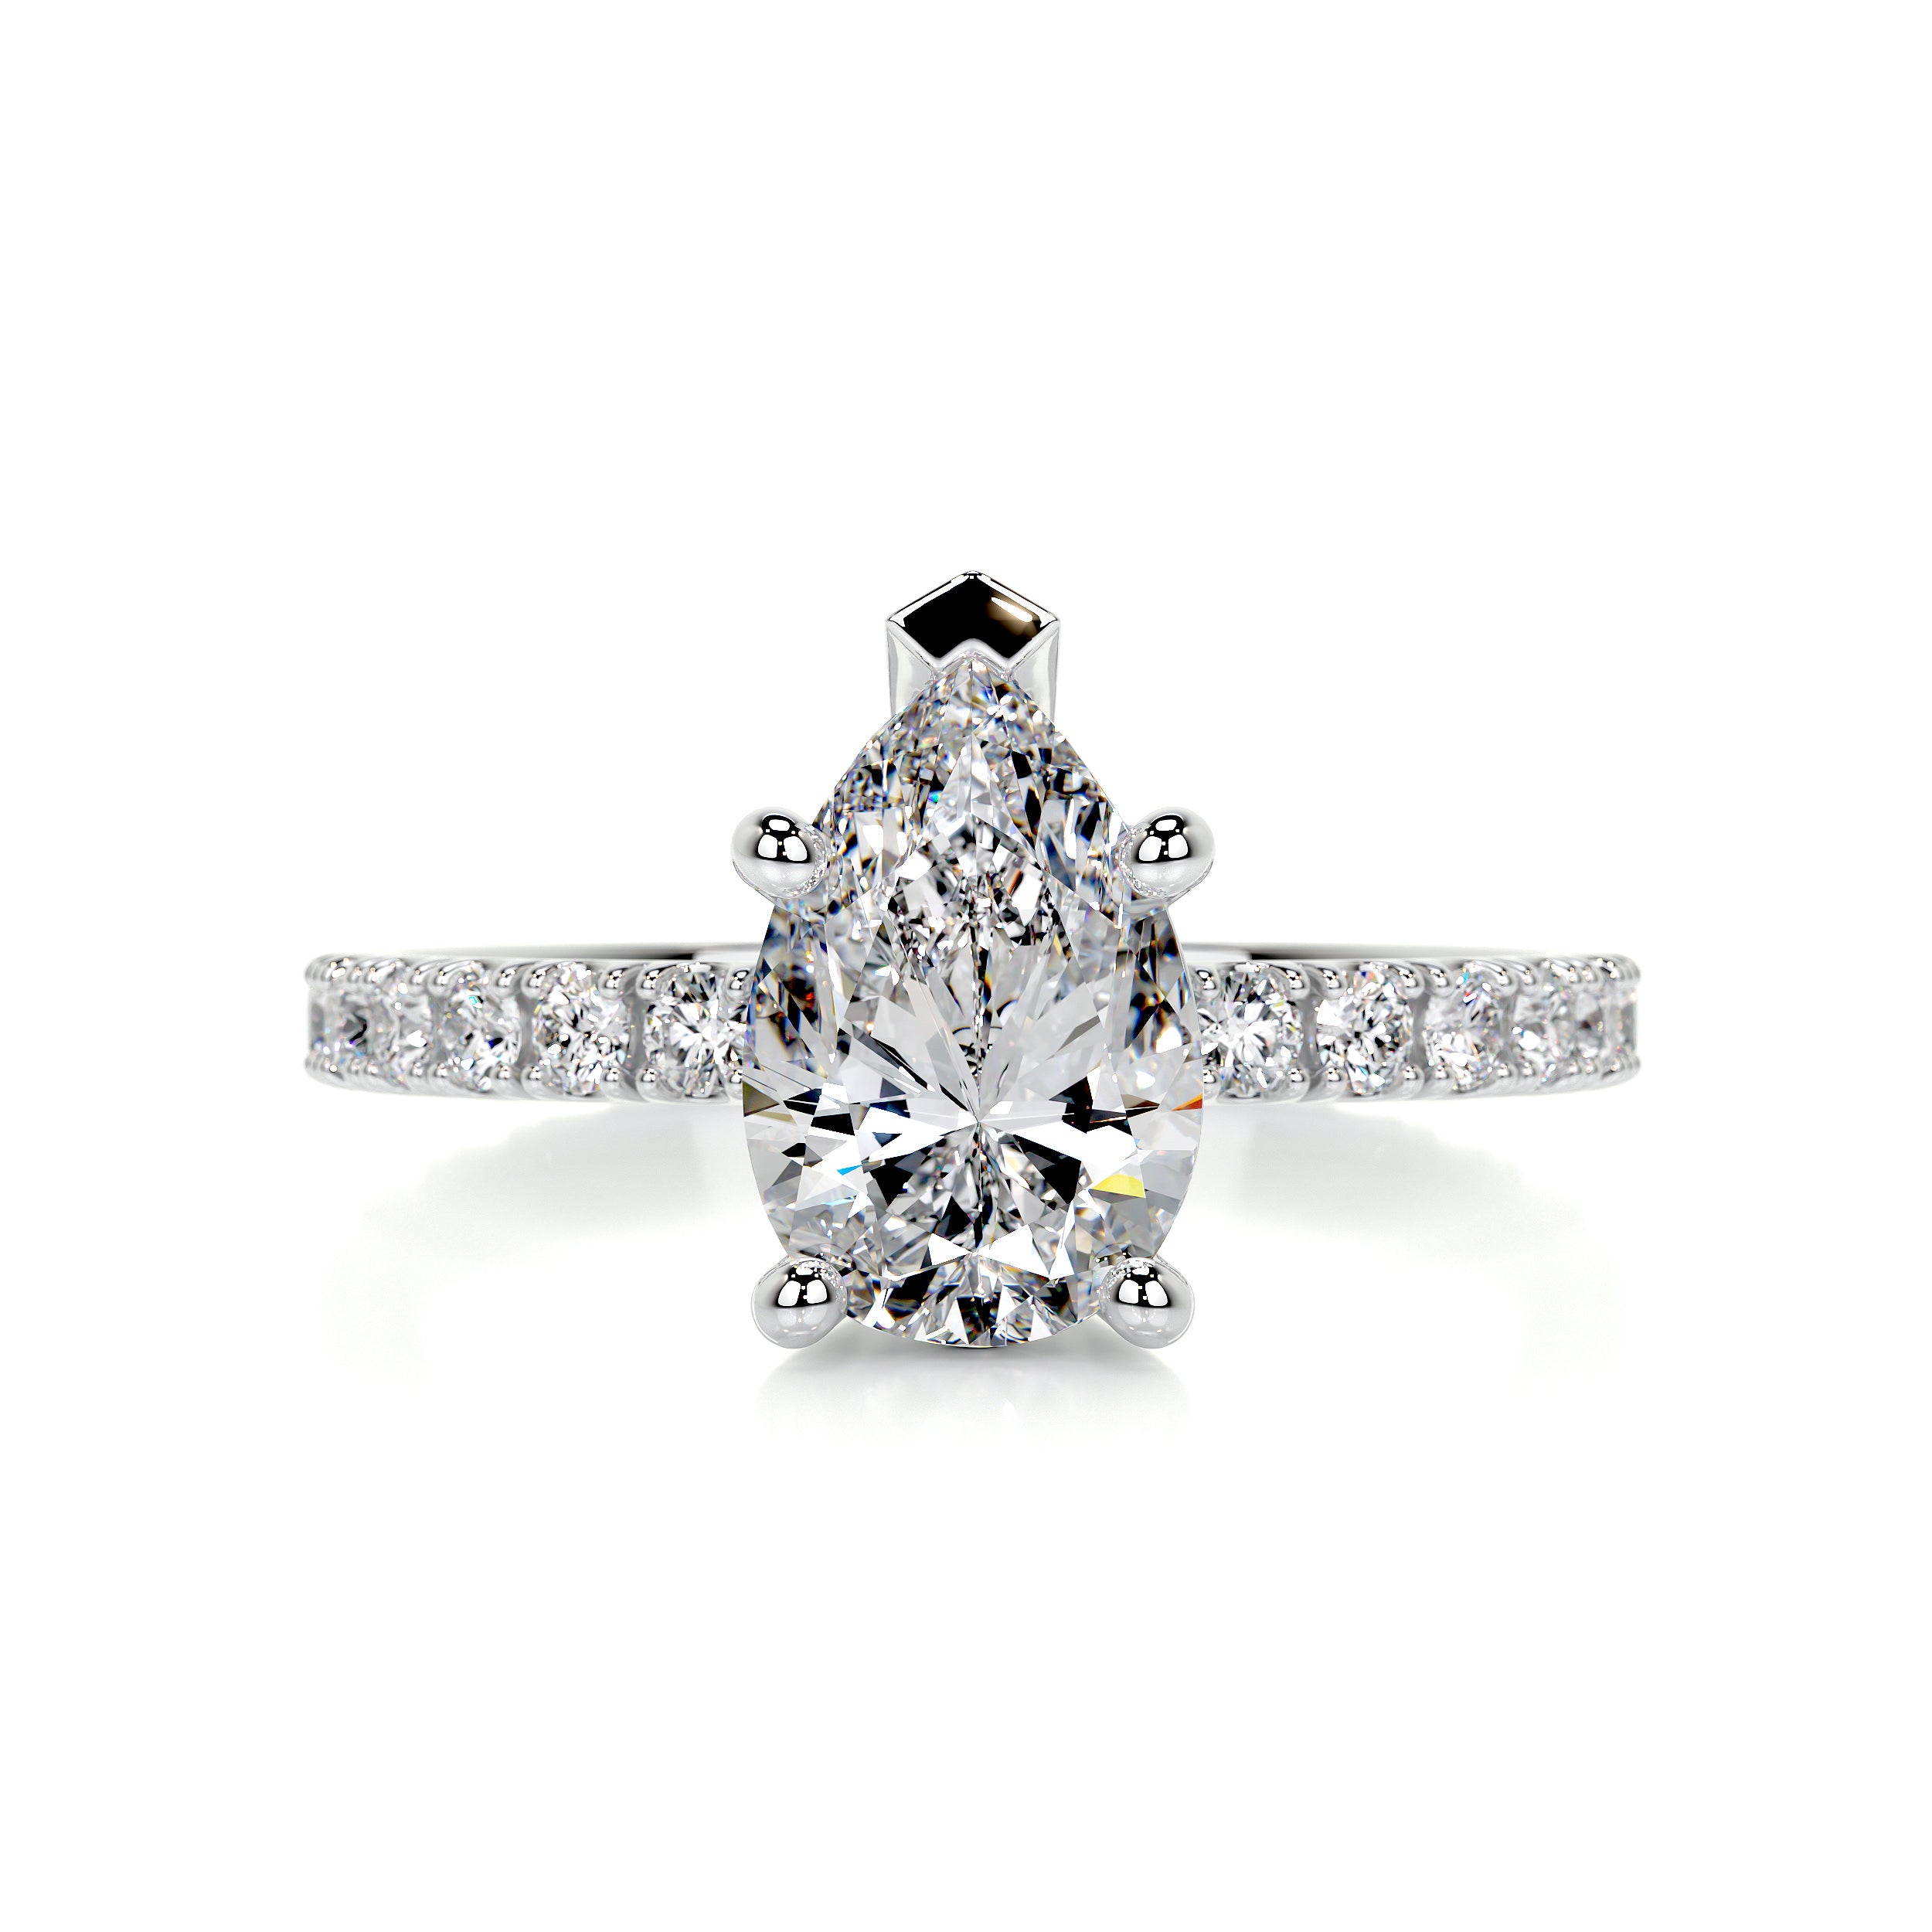 Hailey Diamond Engagement Ring   (2 Carat) -18K White Gold